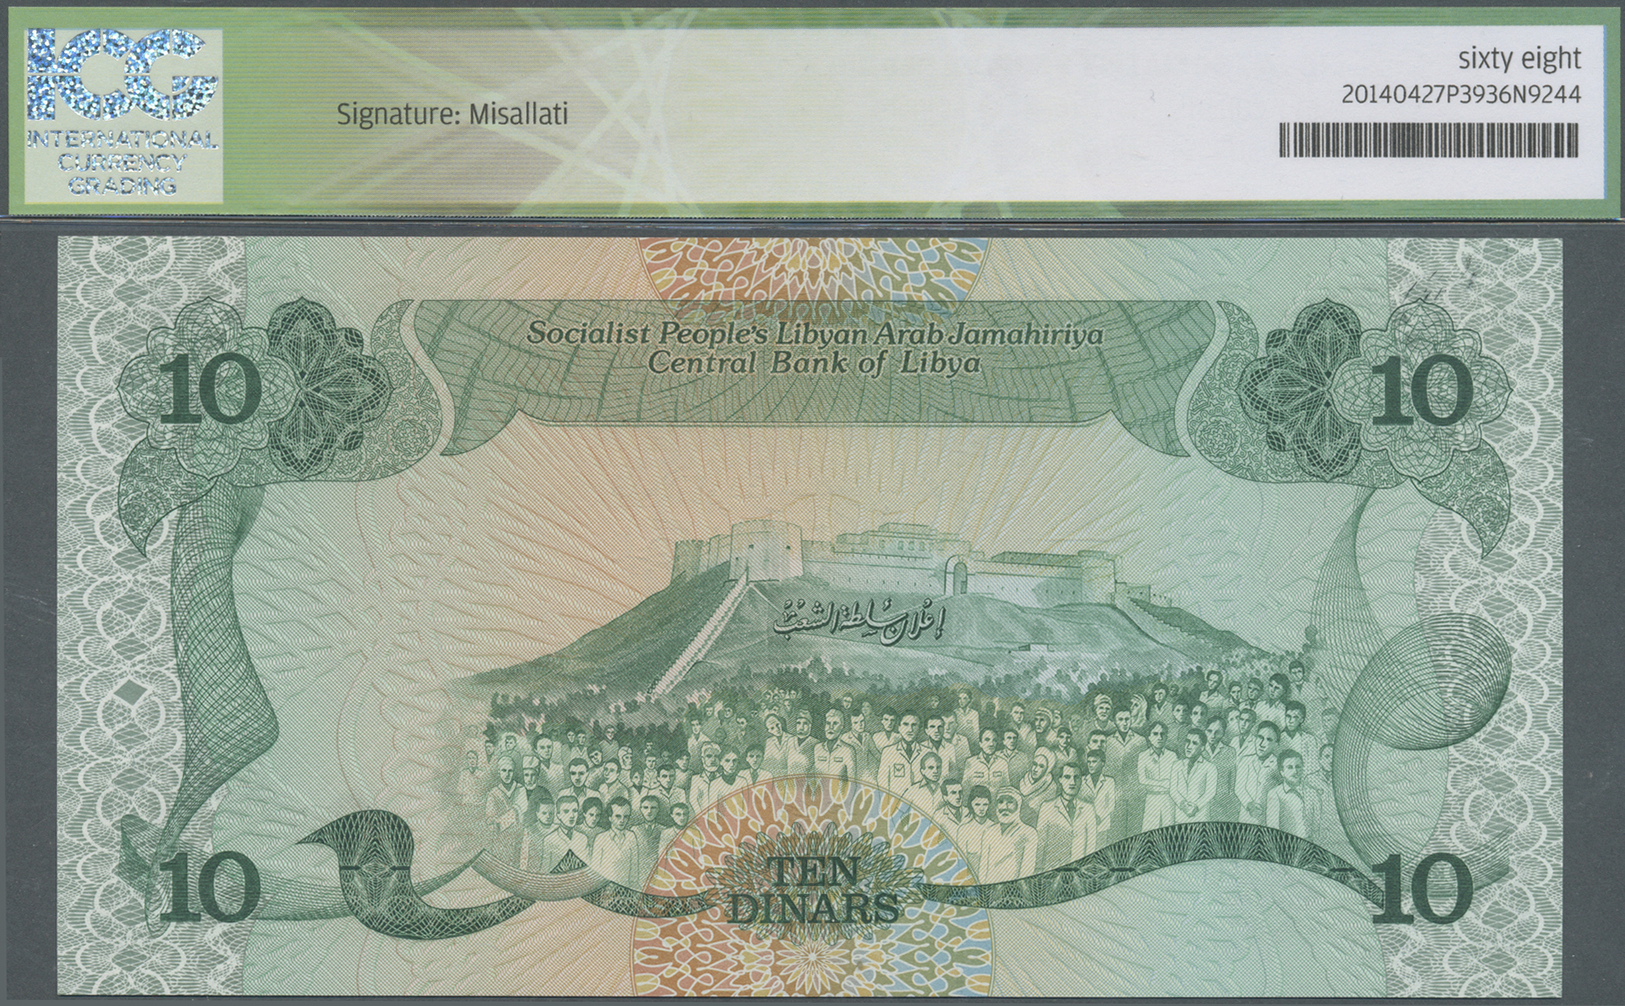 01583 Libya / Libyen: Libya: 10 Dinars ND(1984) P. 51, ICG Graded 68 GEM UNC. - Libya